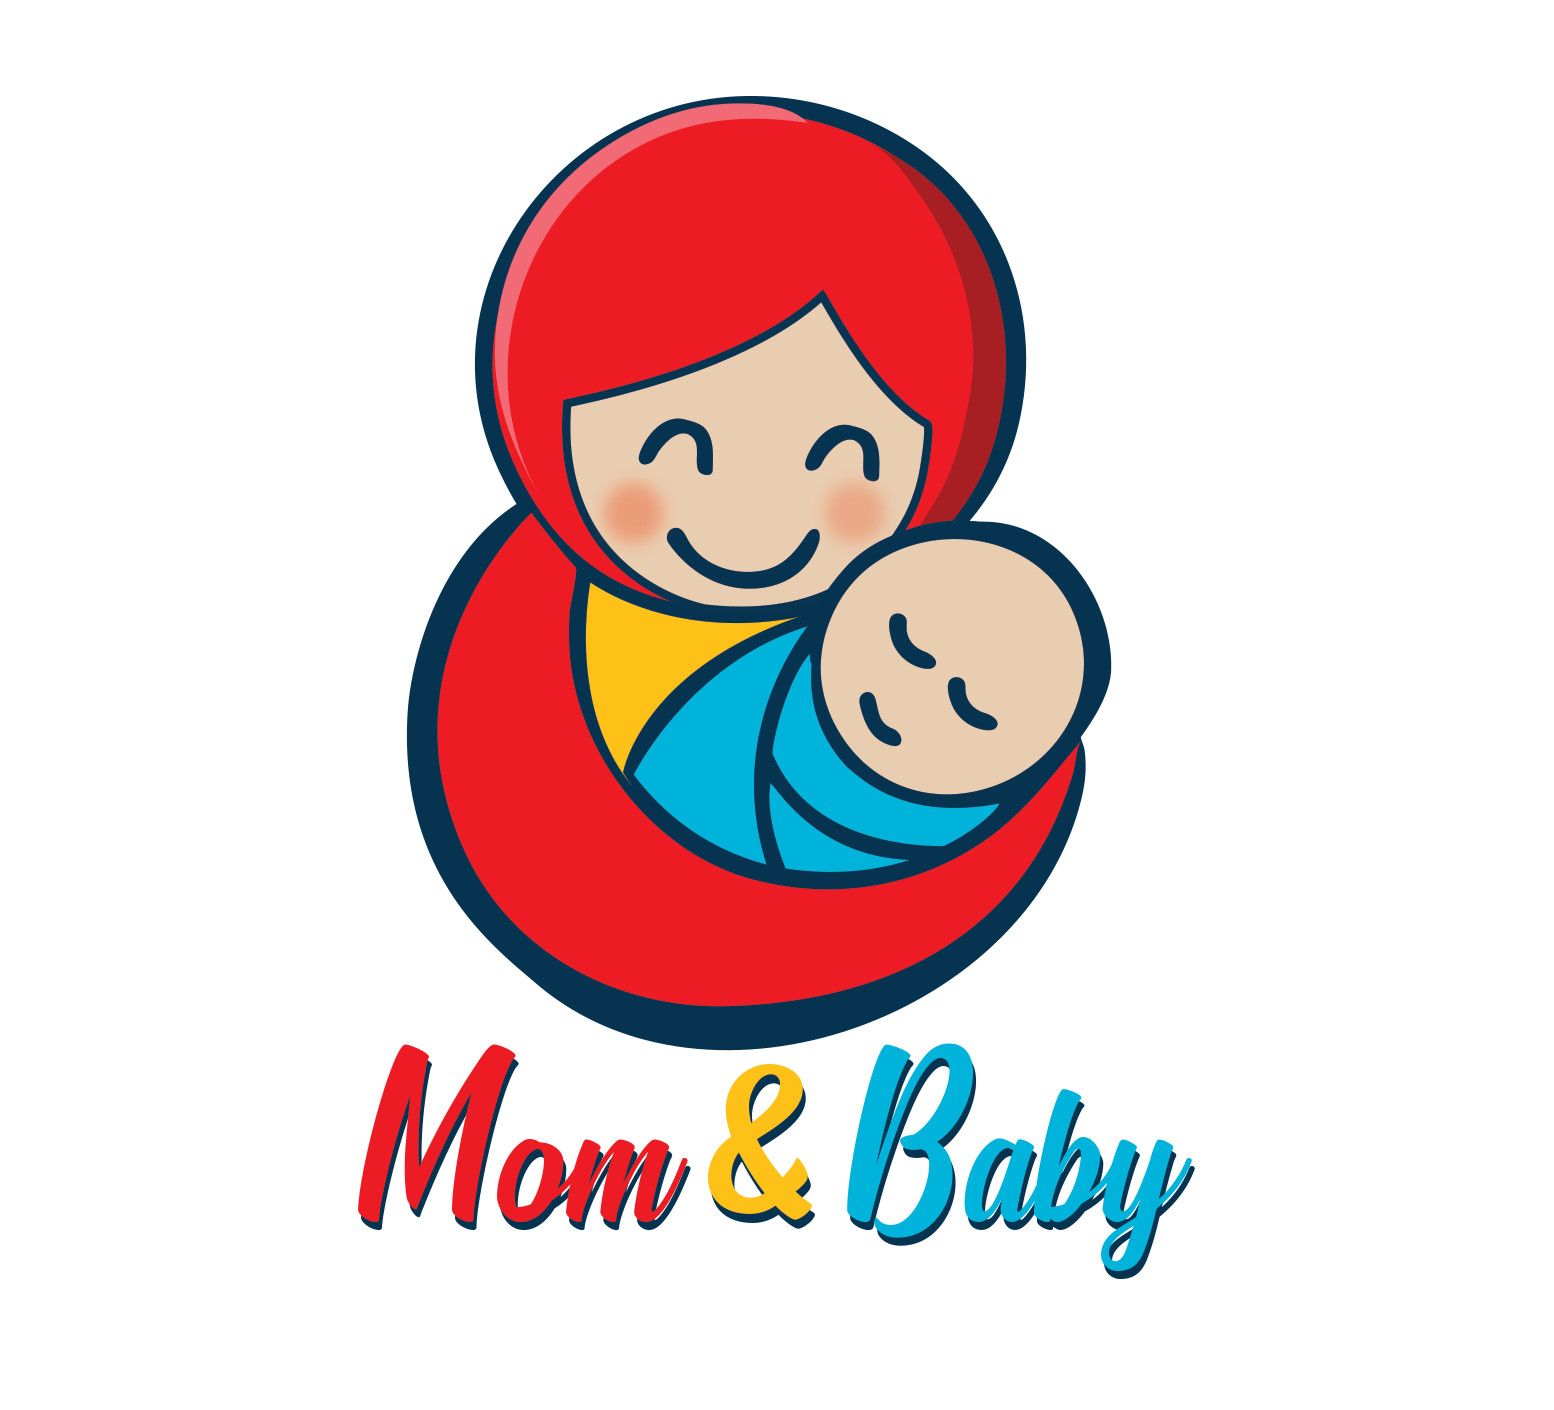 Mom & Baby Mall